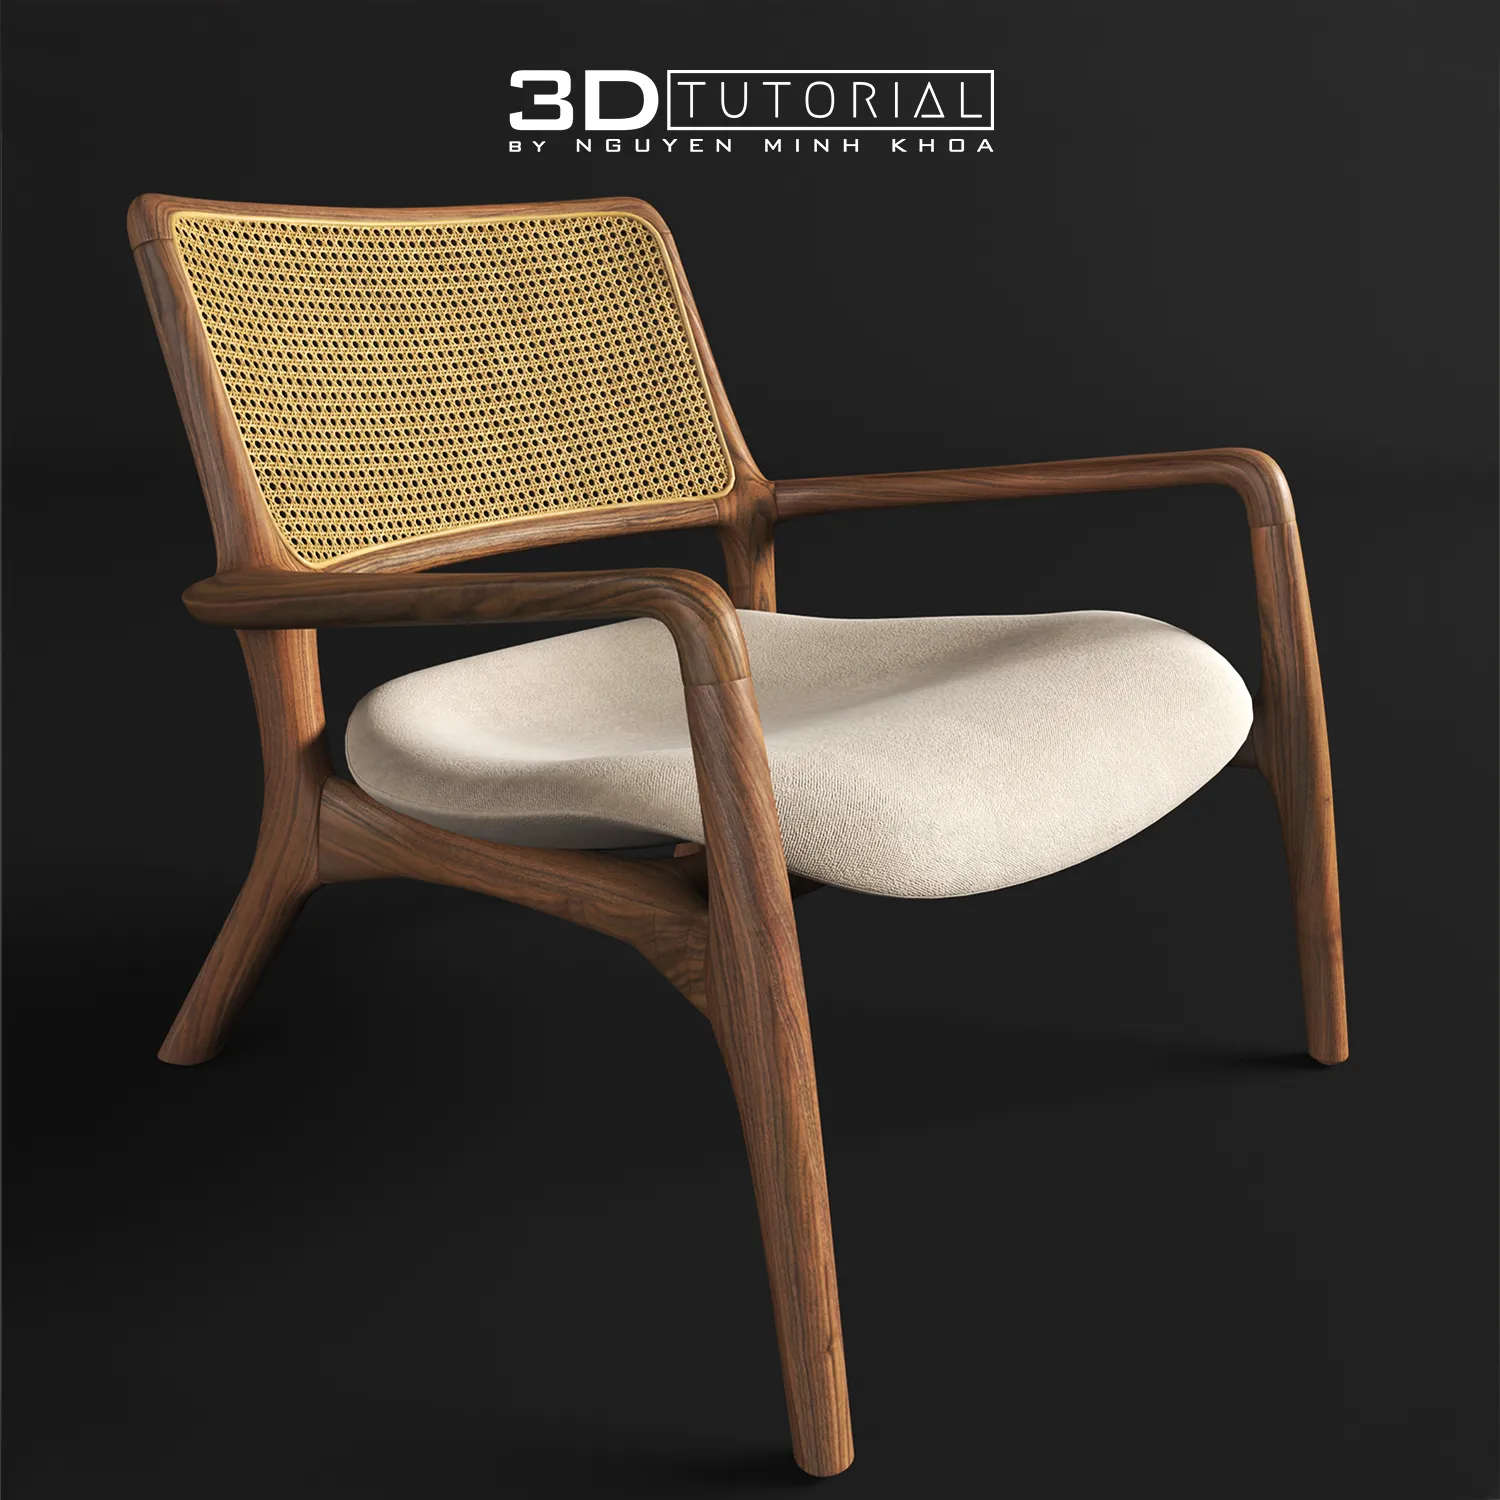 FURNITURE 3D MODELS – Mad loungr chair modelbyNguyenMinhKhoa